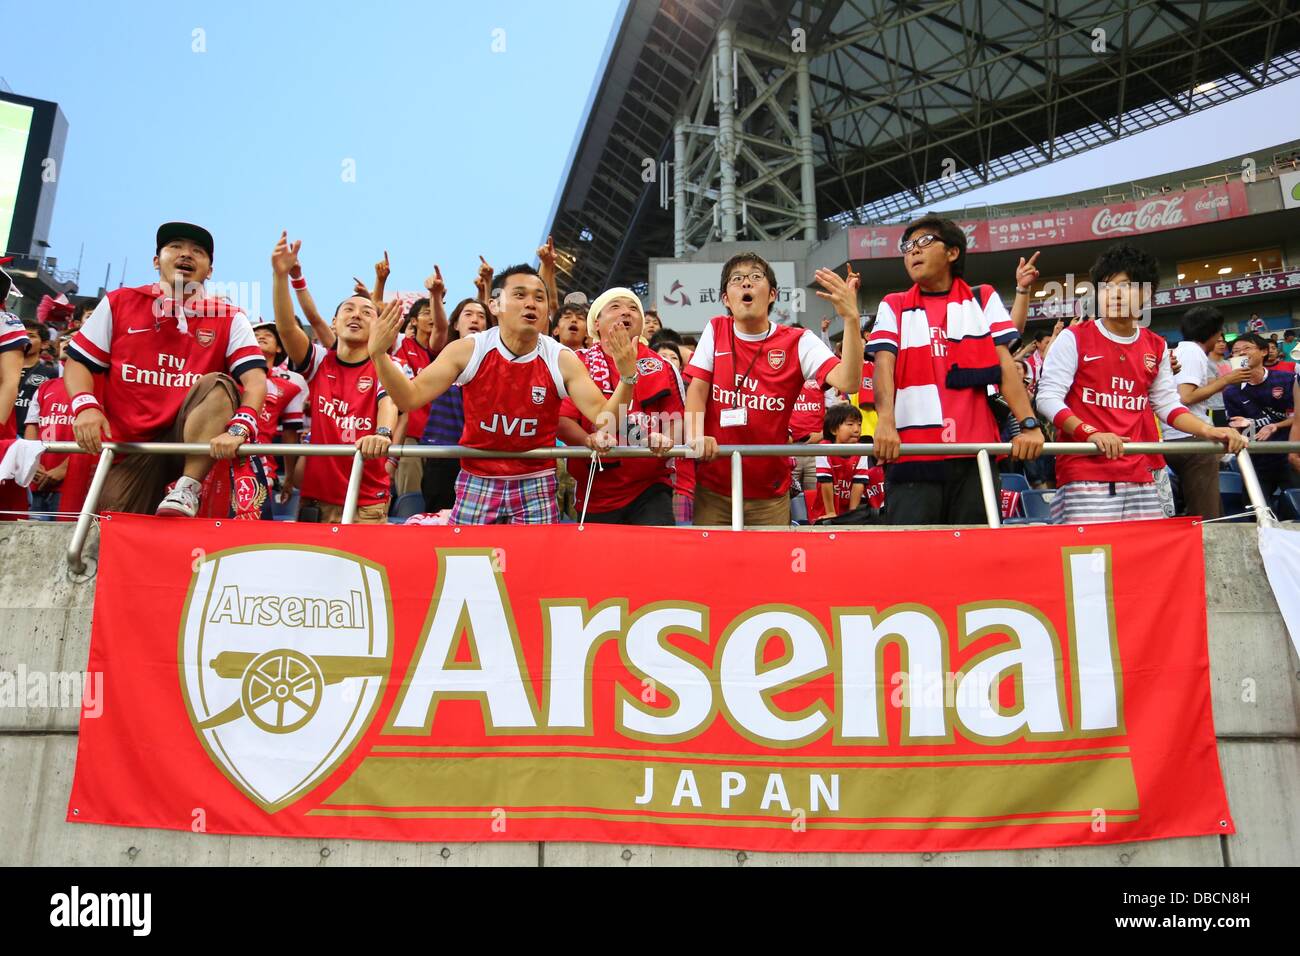 Arsenal Fans July 26 13 Football Soccer The Saitama City Stock Photo Alamy